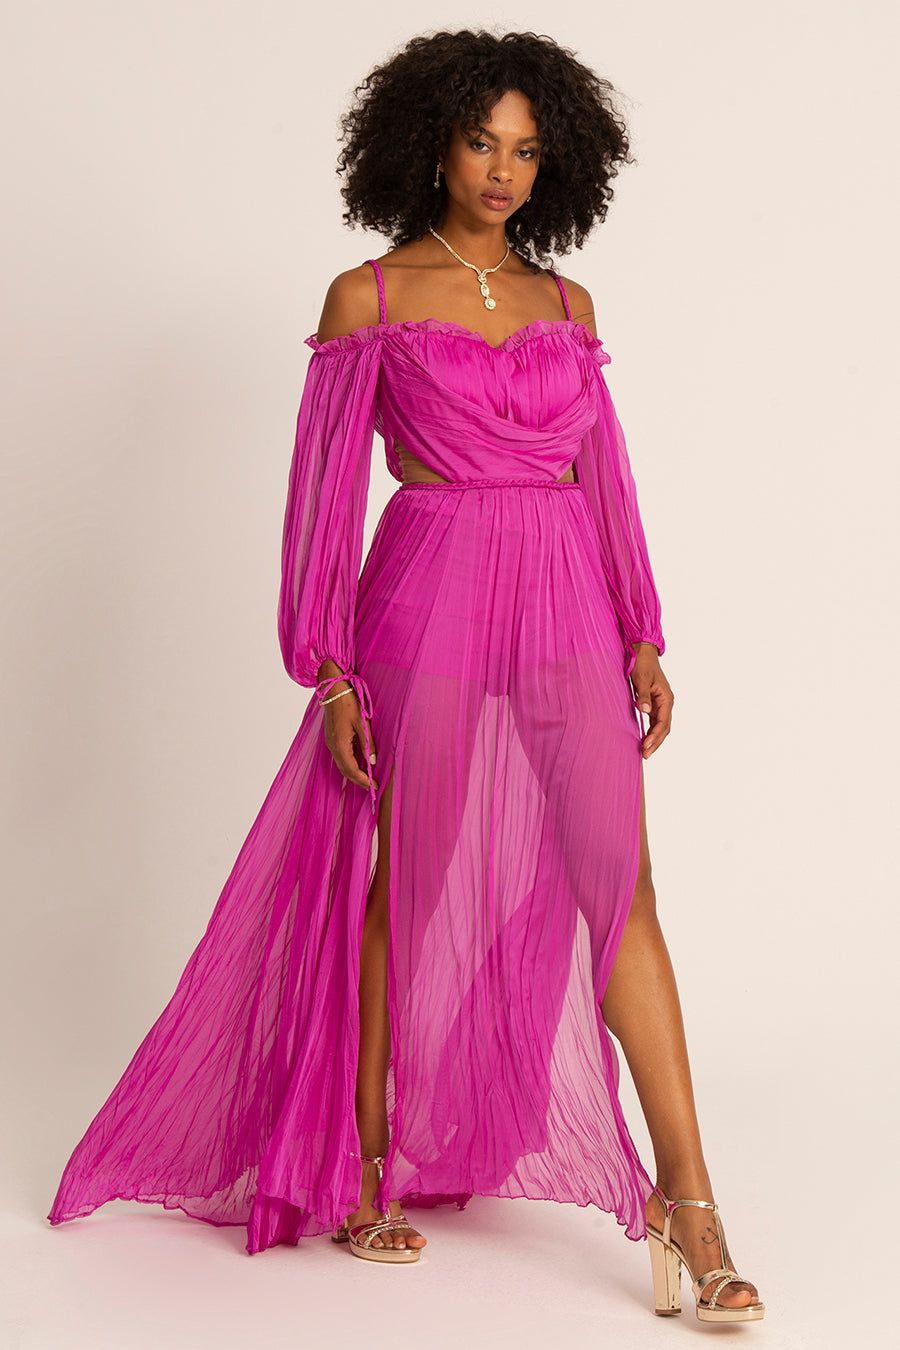 Camila - Mystic Evenings | Evening and Prom Dresses